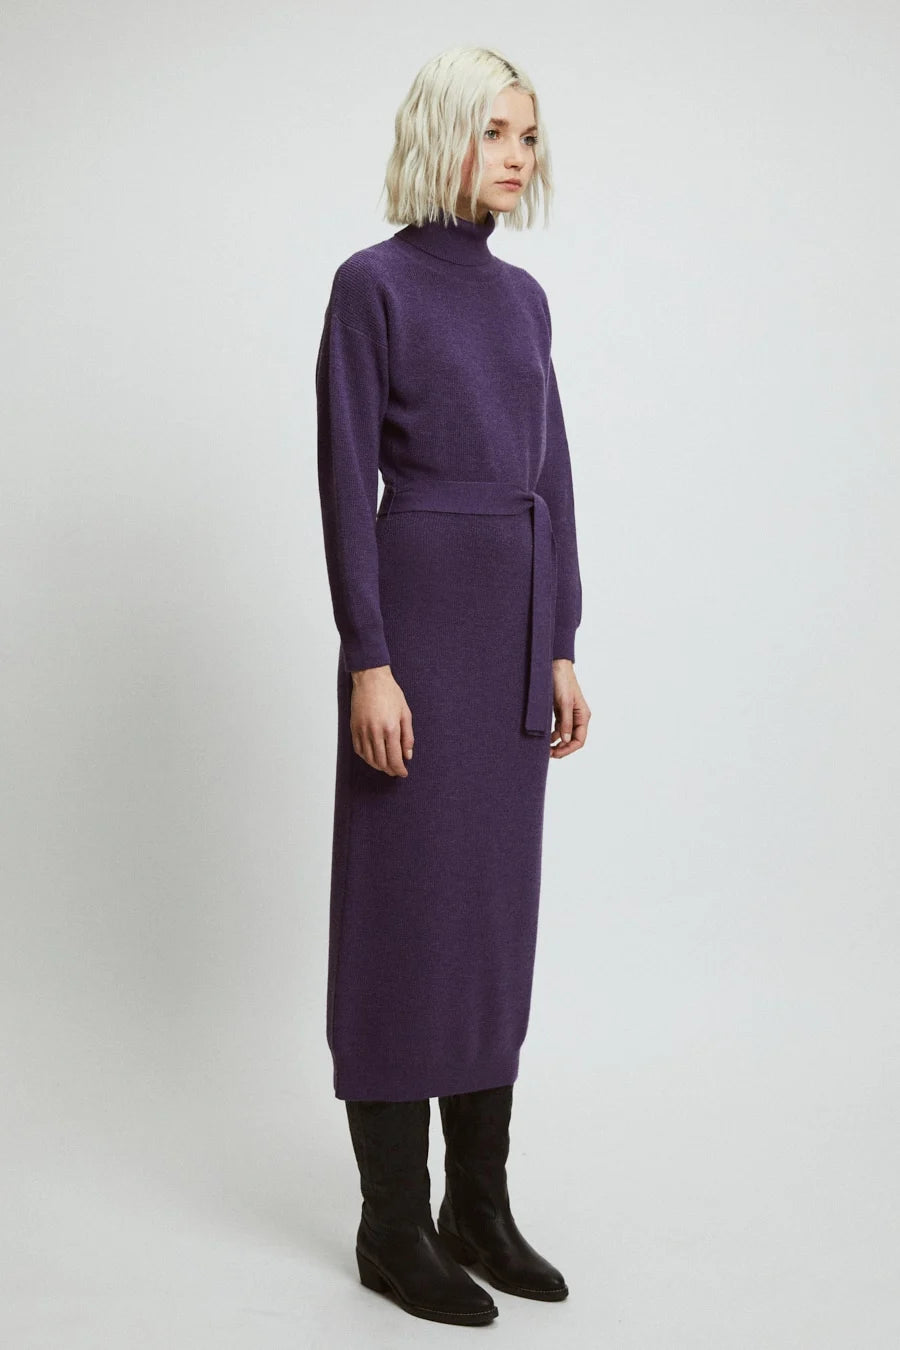 Hart Dress - Purple by Rita Row